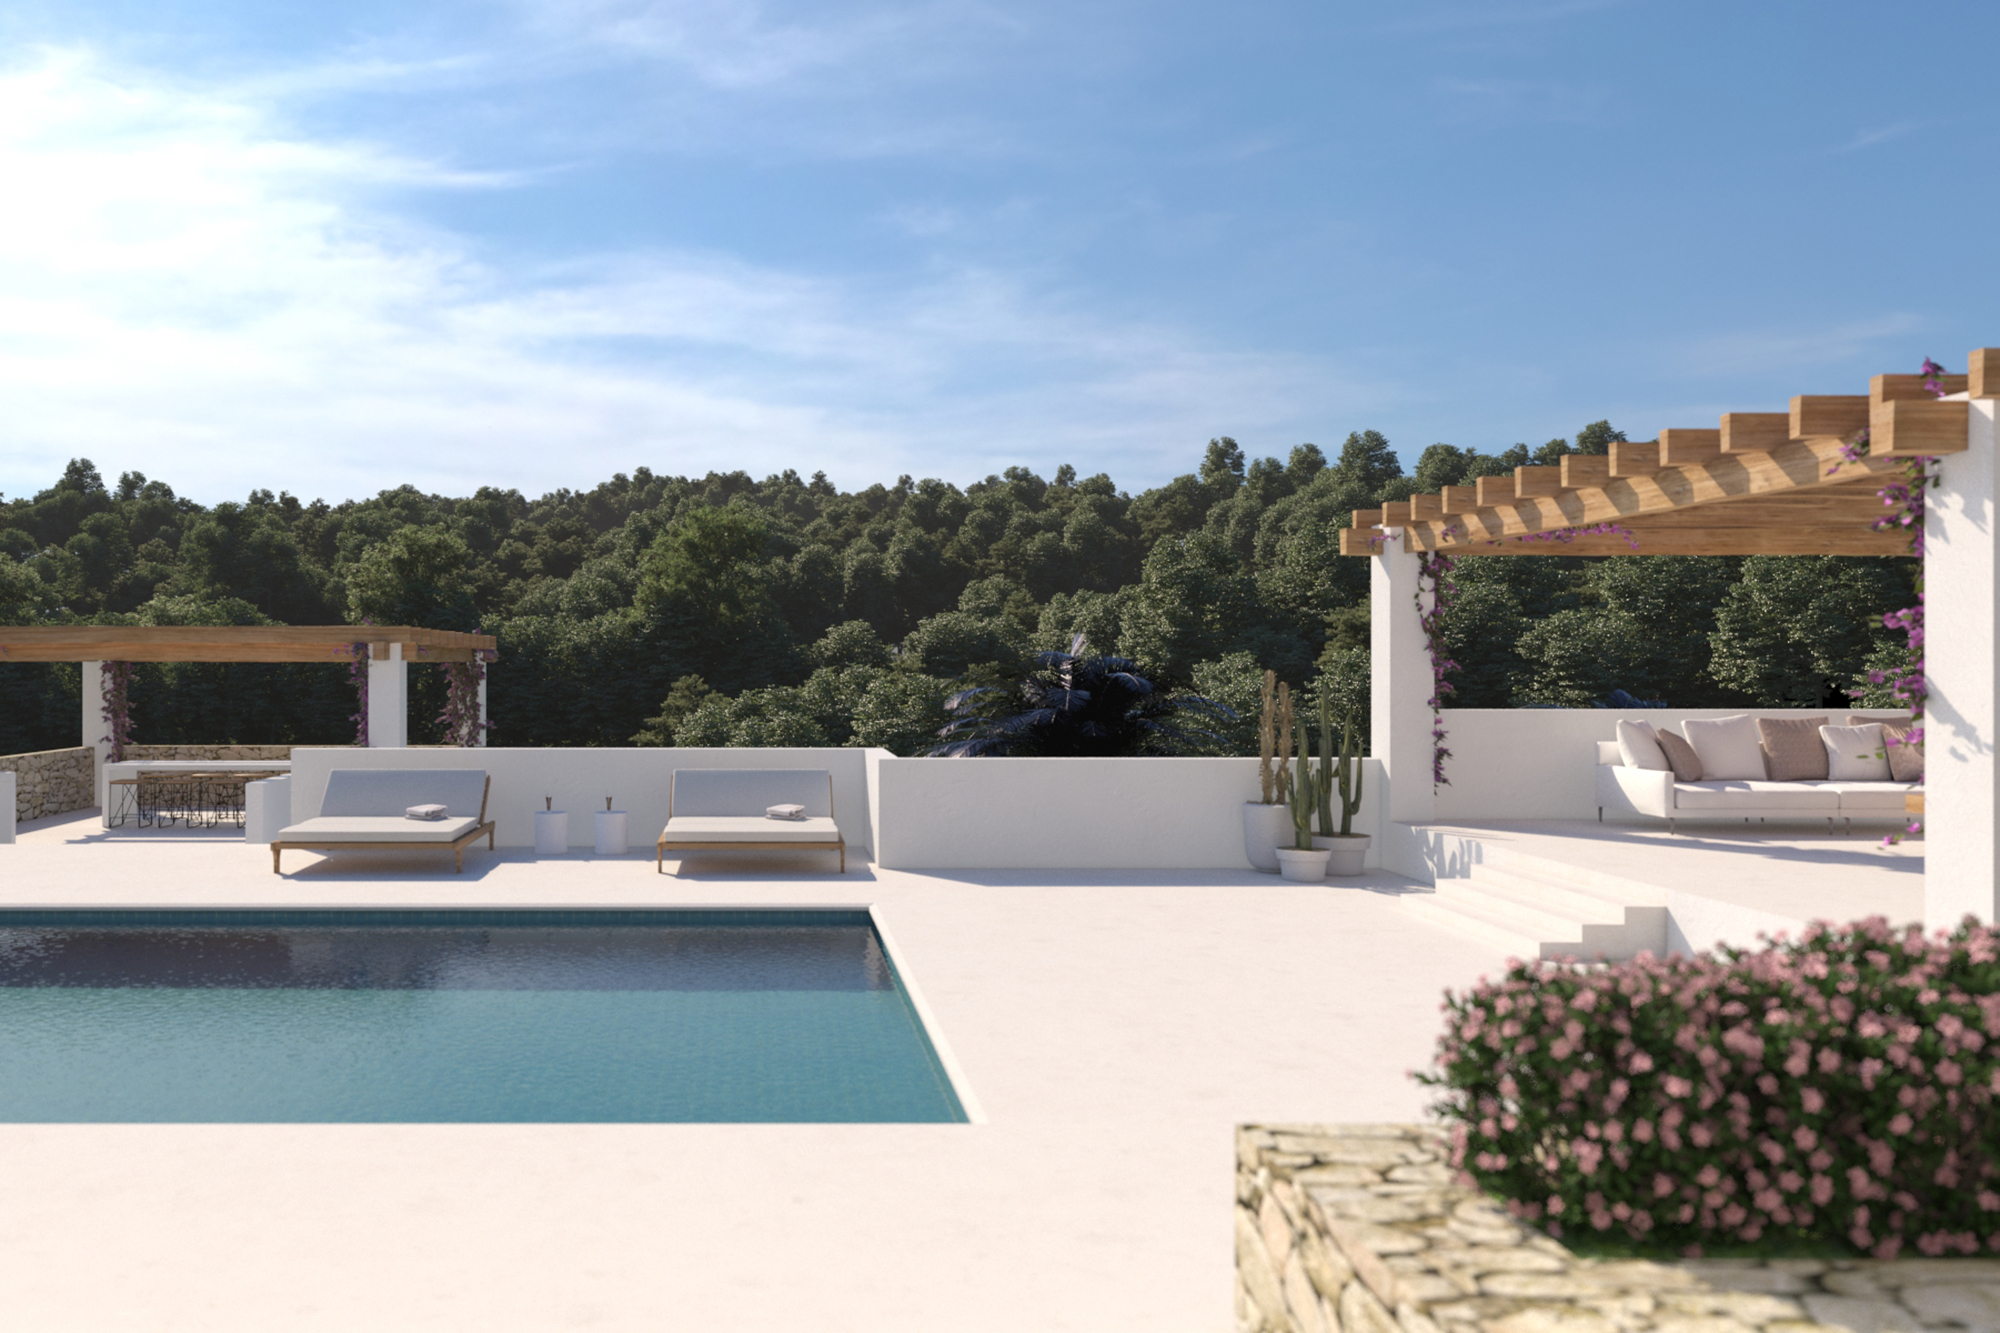 Swimming pool and pergola in Ibiza at Vista Verde - a luxury villa to buy in Santa Gertrudis